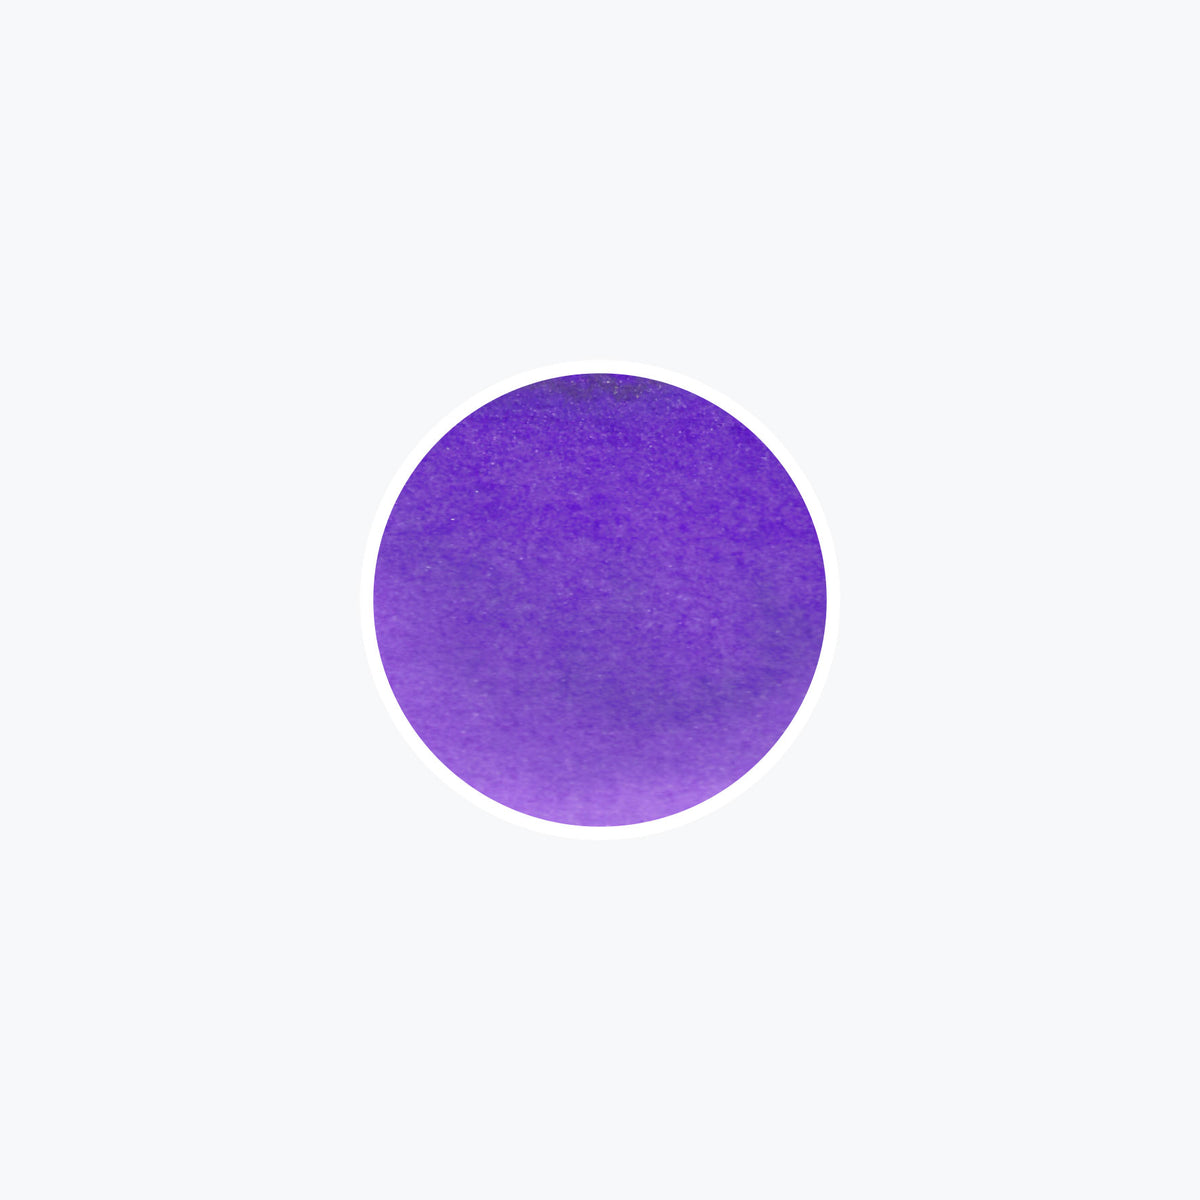 Organics Studio - Fountain Pen Ink - Emoji - Eggplant Purple (Shimmer)